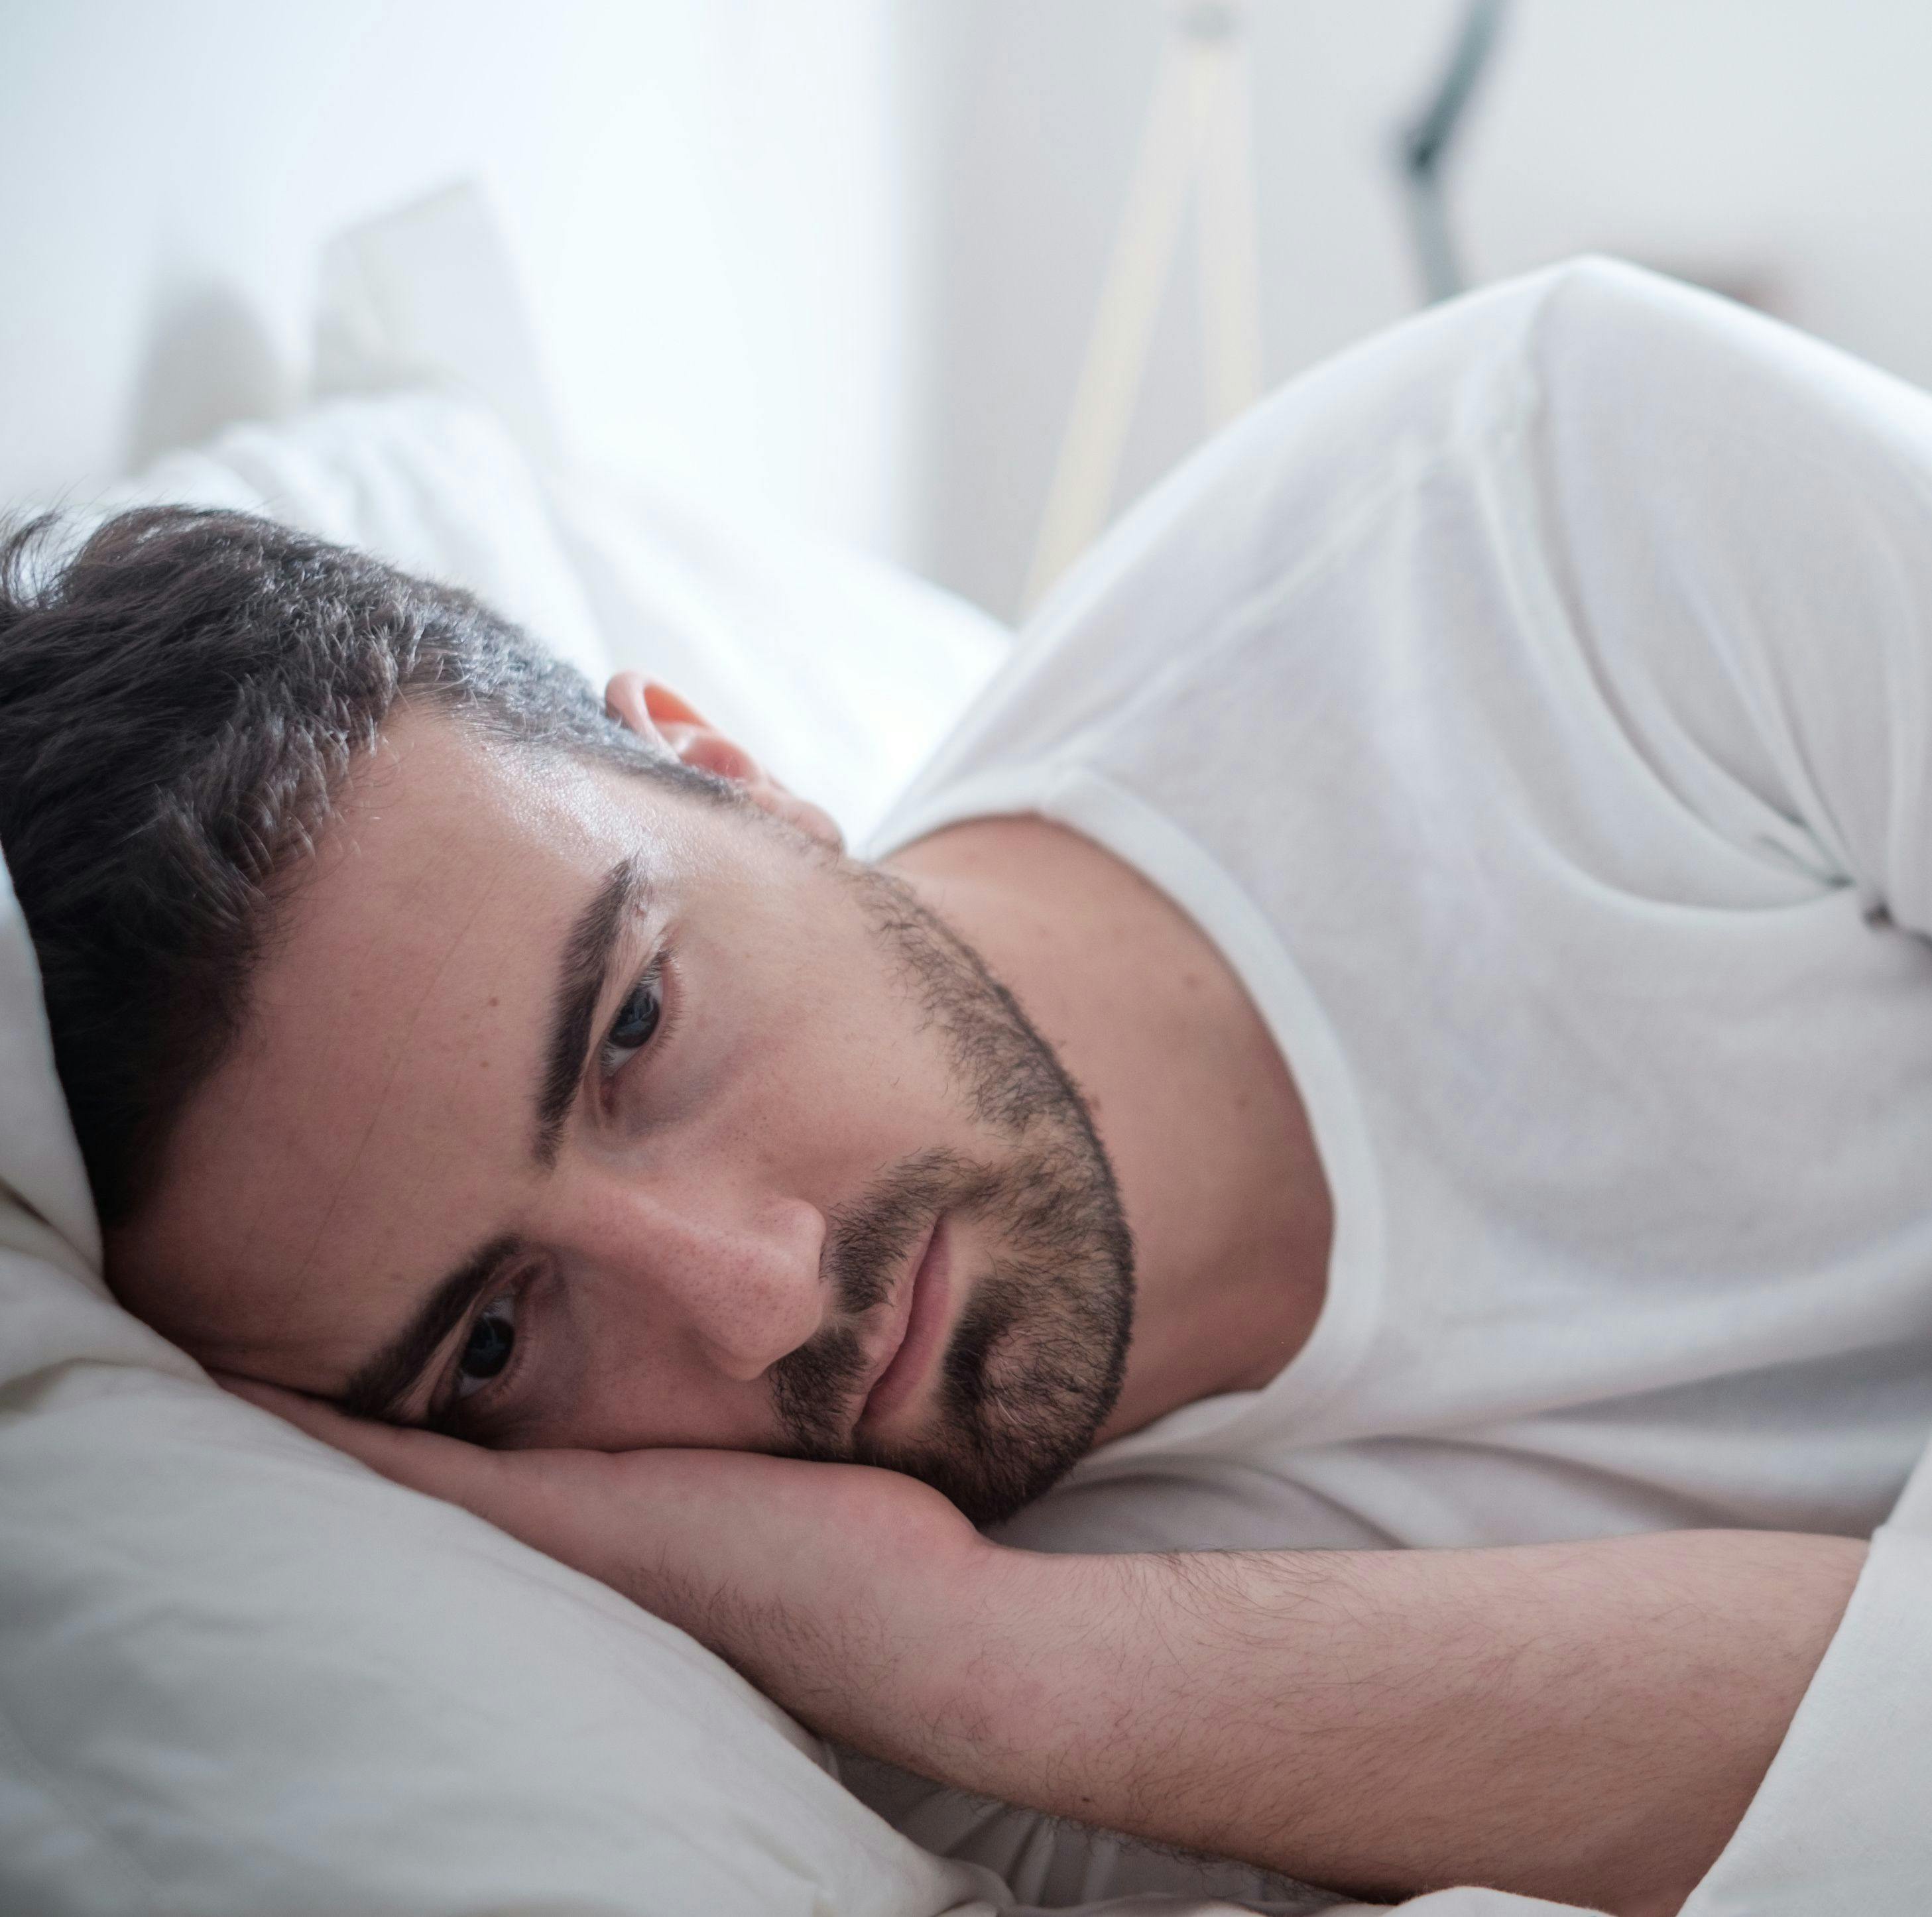 Second-Hand Smoke Impacting Sleep Disturbances